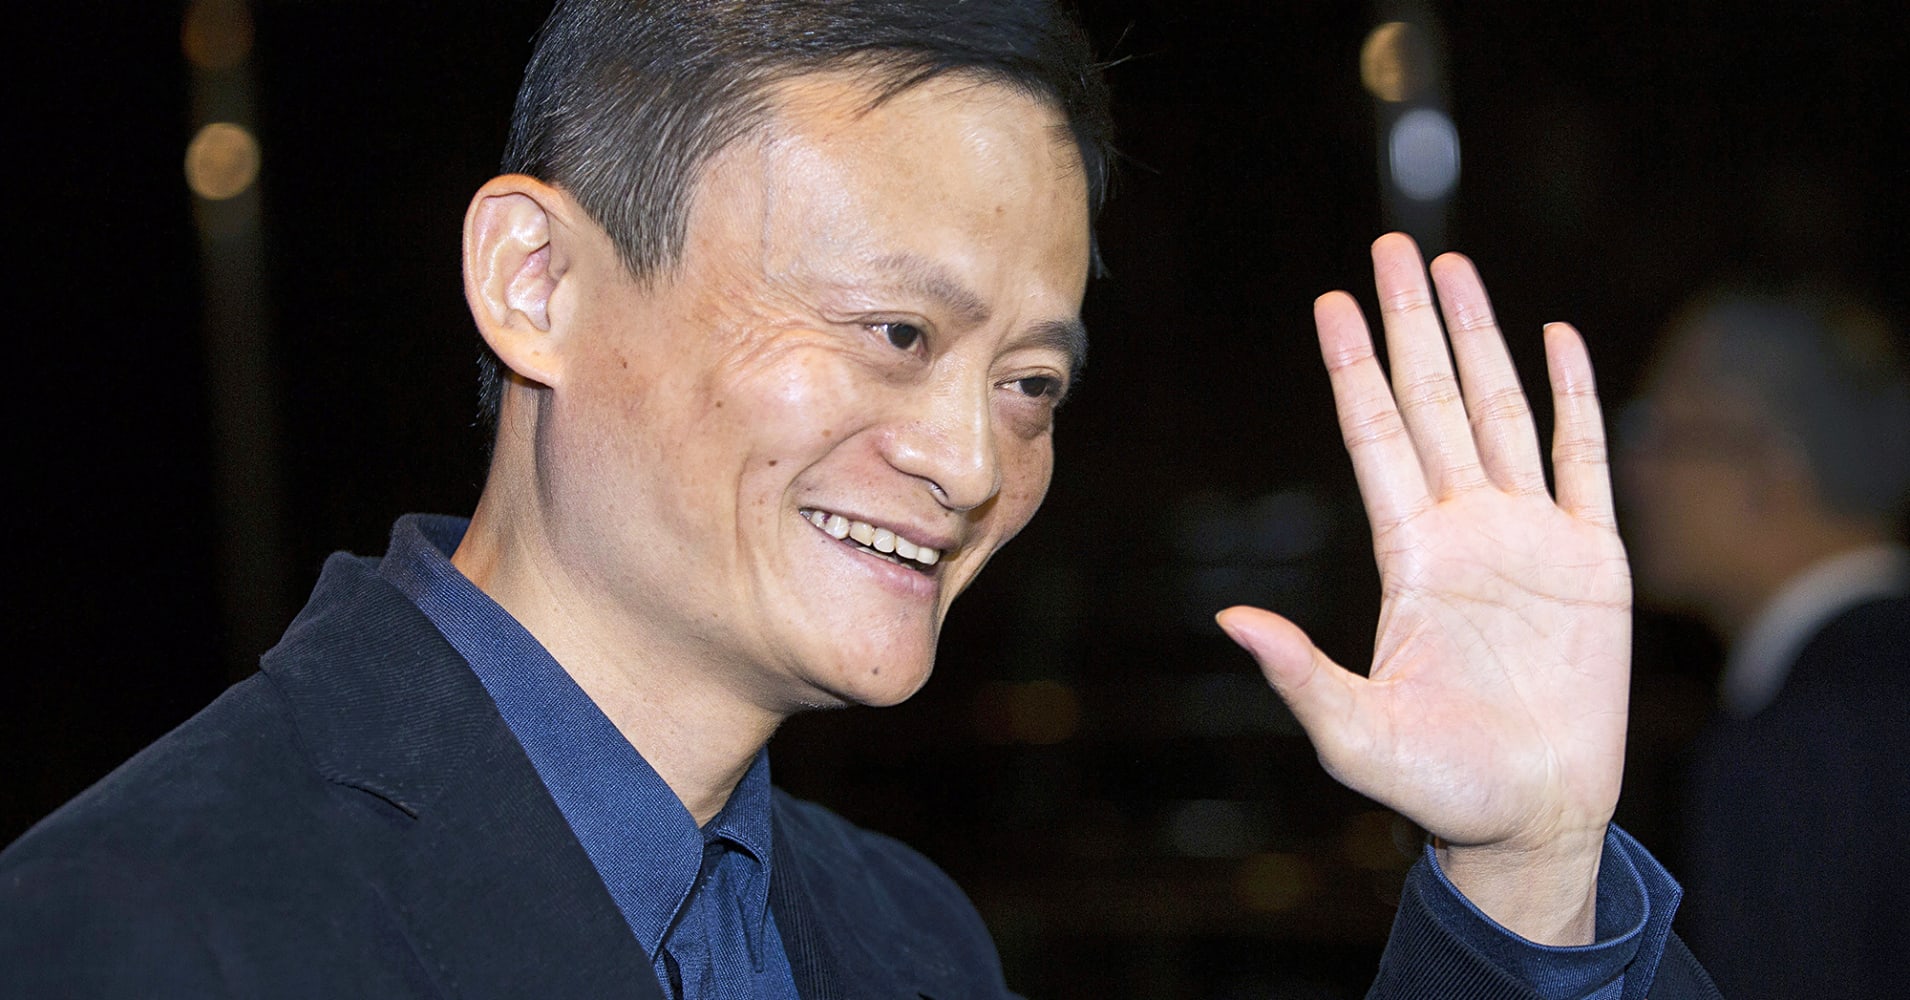 Into the hands of Jack Ma - Alibaba entrepreneur (China) 102010340-jack-ma.1910x1000